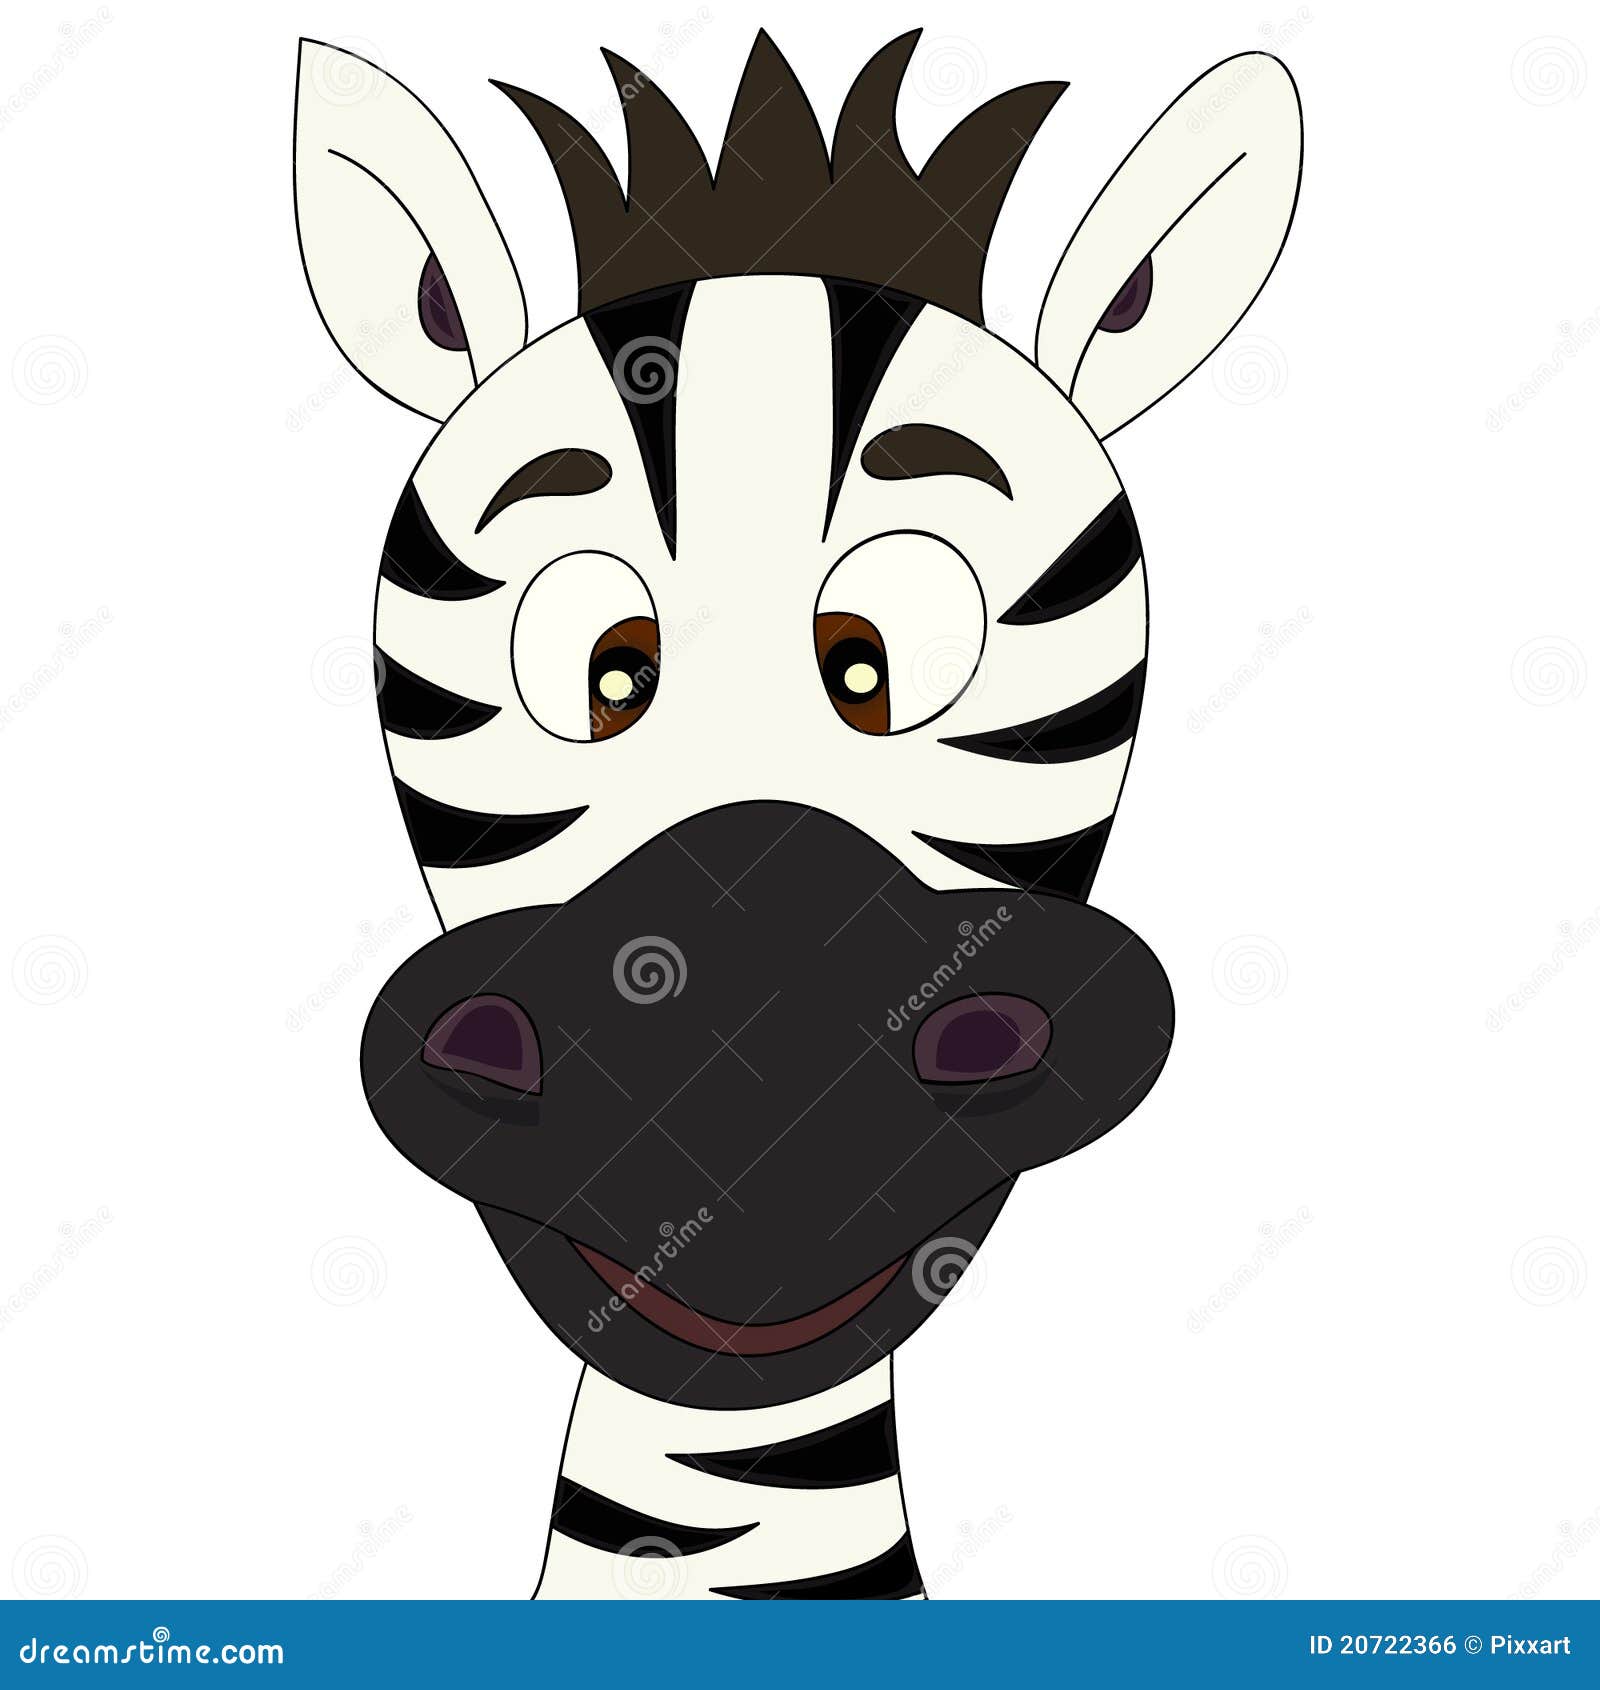 zebra face clip art - photo #10